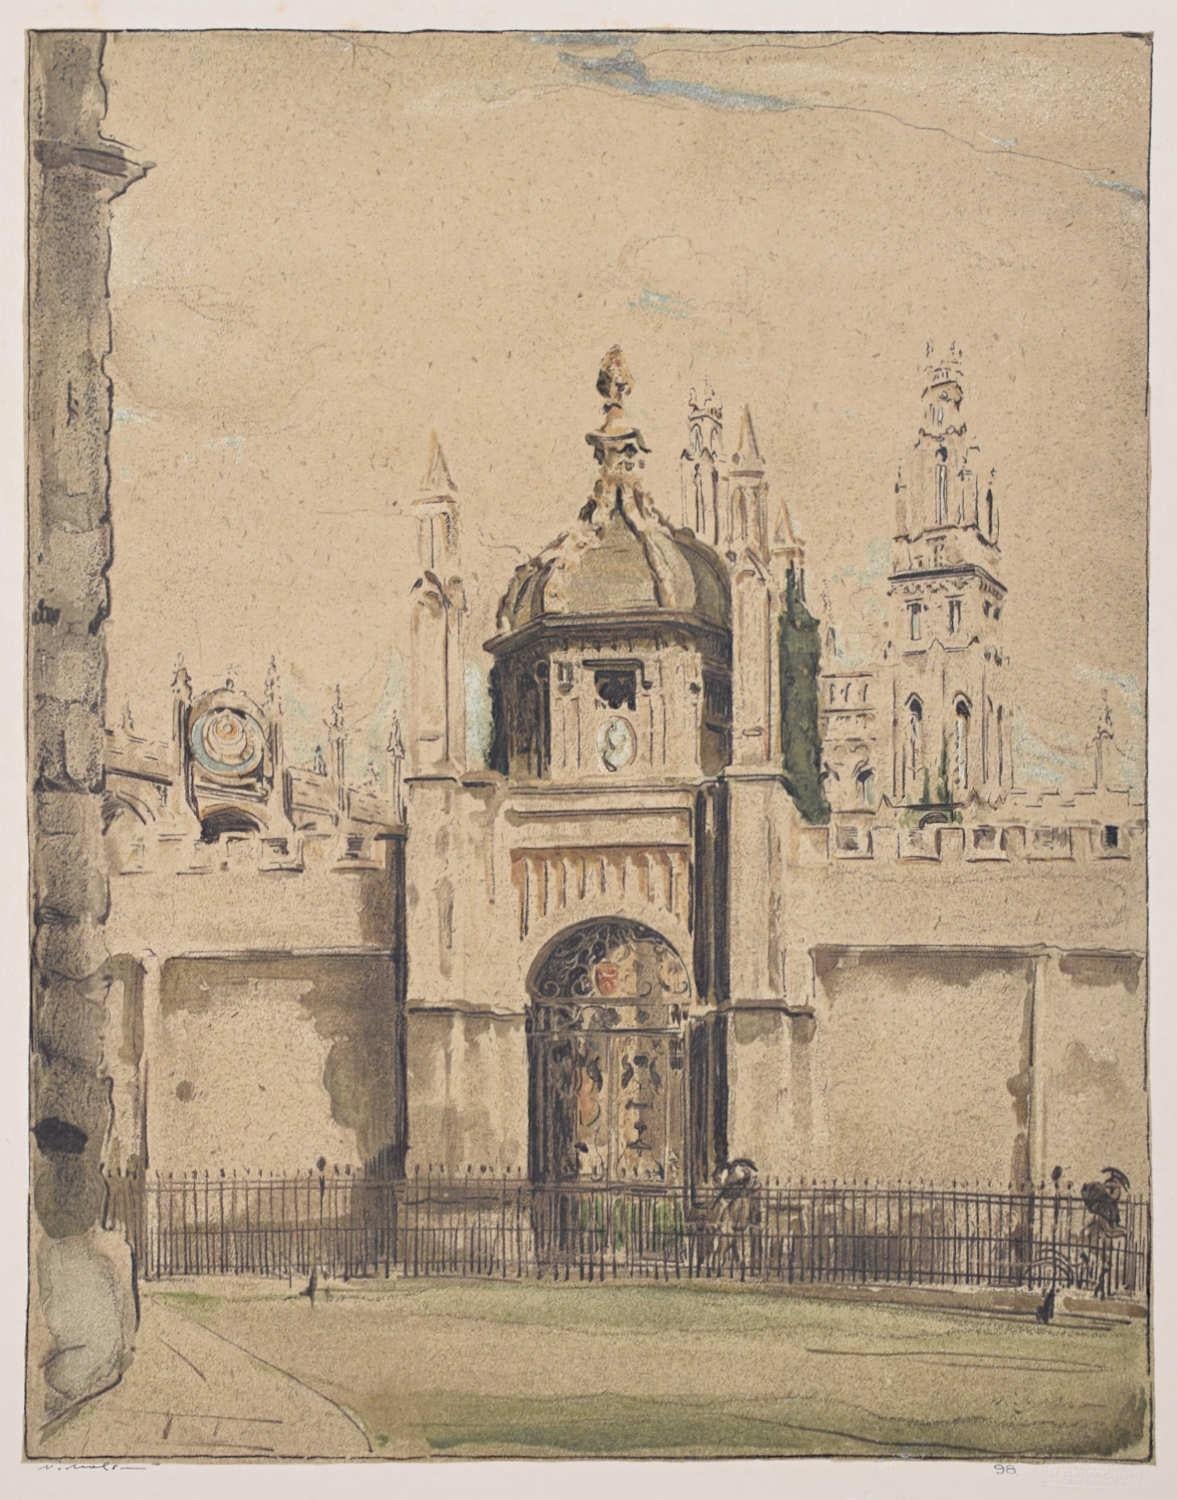 All Souls College, Oxford, William Nicholson lithograph 1905  Stafford Gallery